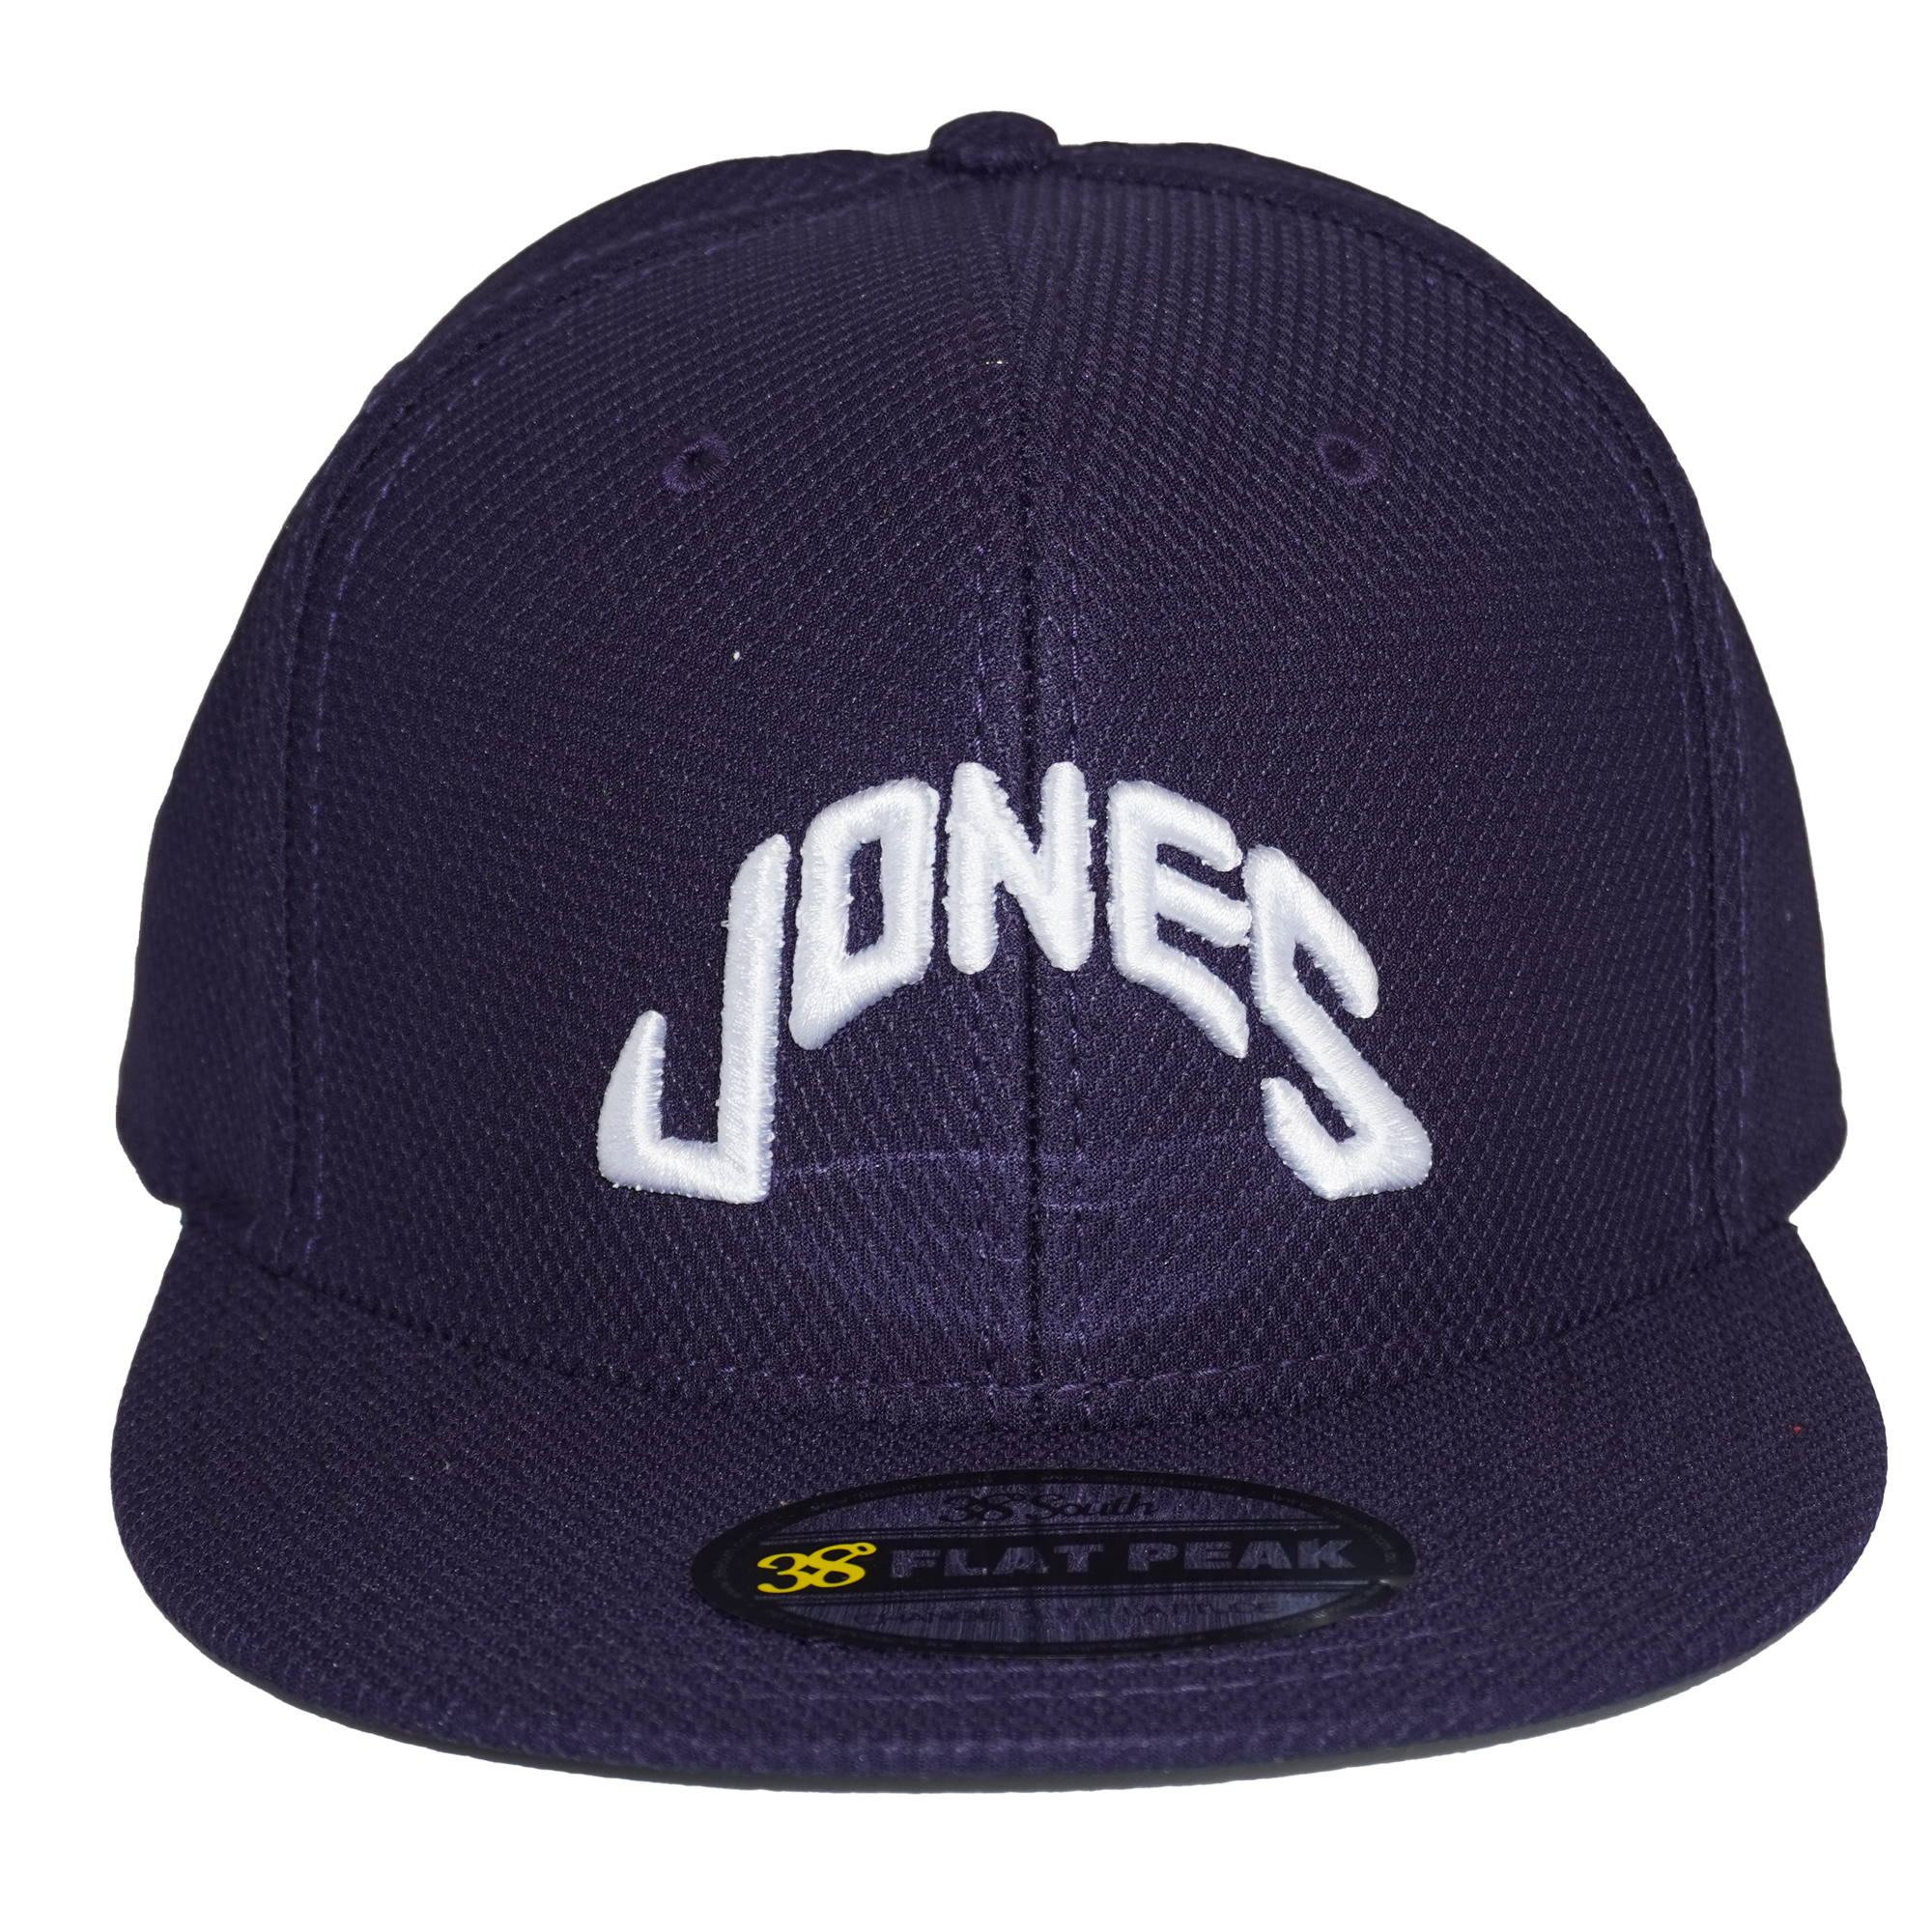 Jones Adjustable Flat Peak Cap